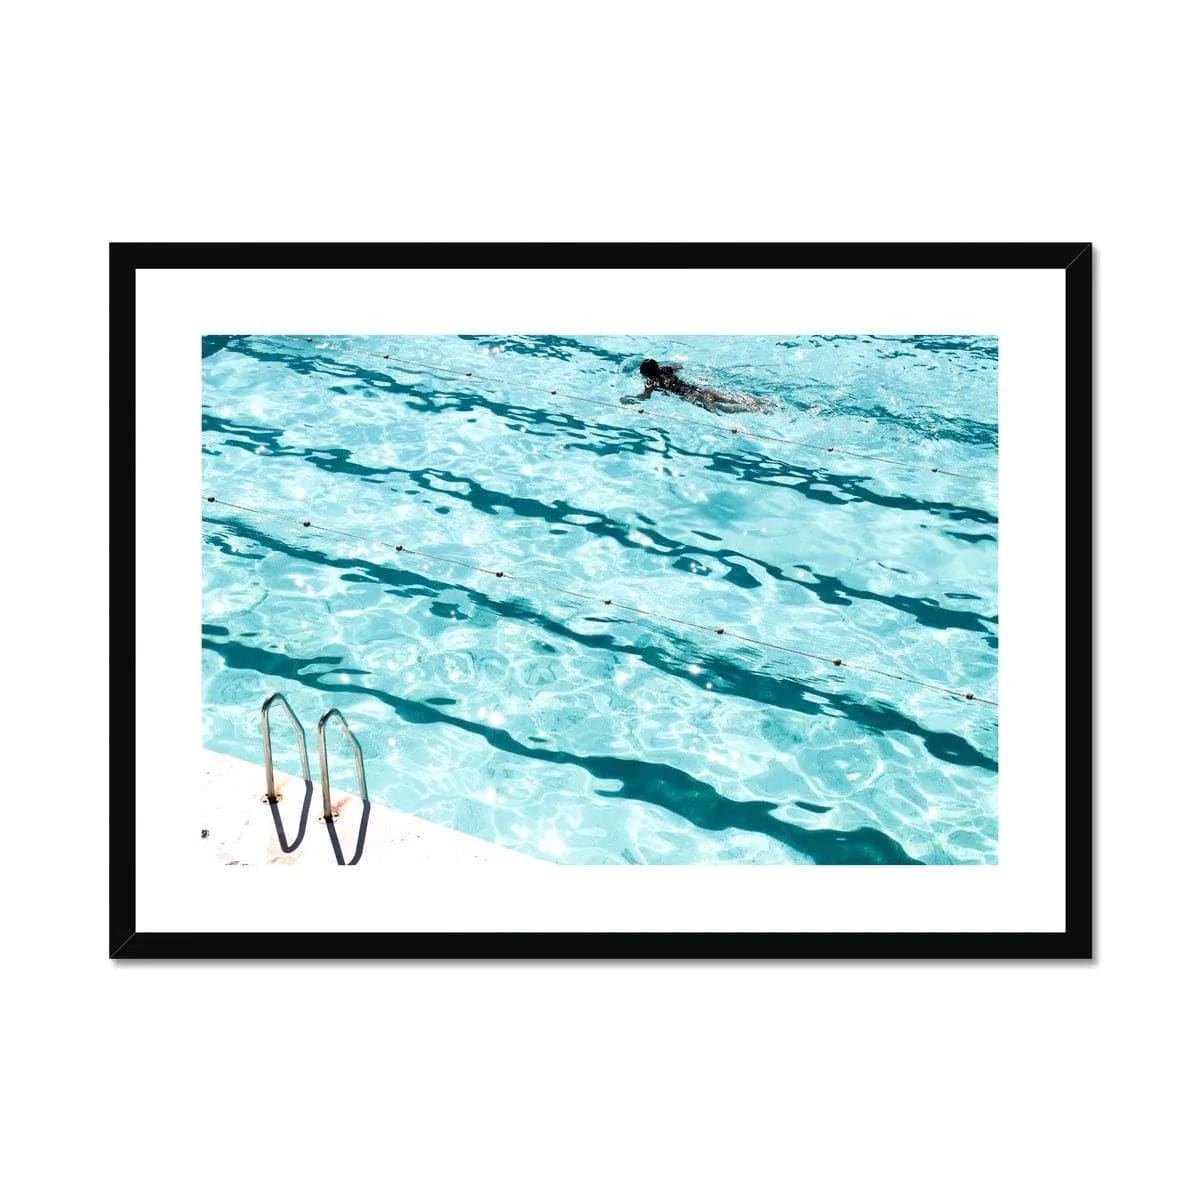 Seek & Ramble Framed A4 Landscape / Black Frame Bondi Icebergs Swimmer Coastal Framed & Mounted Print